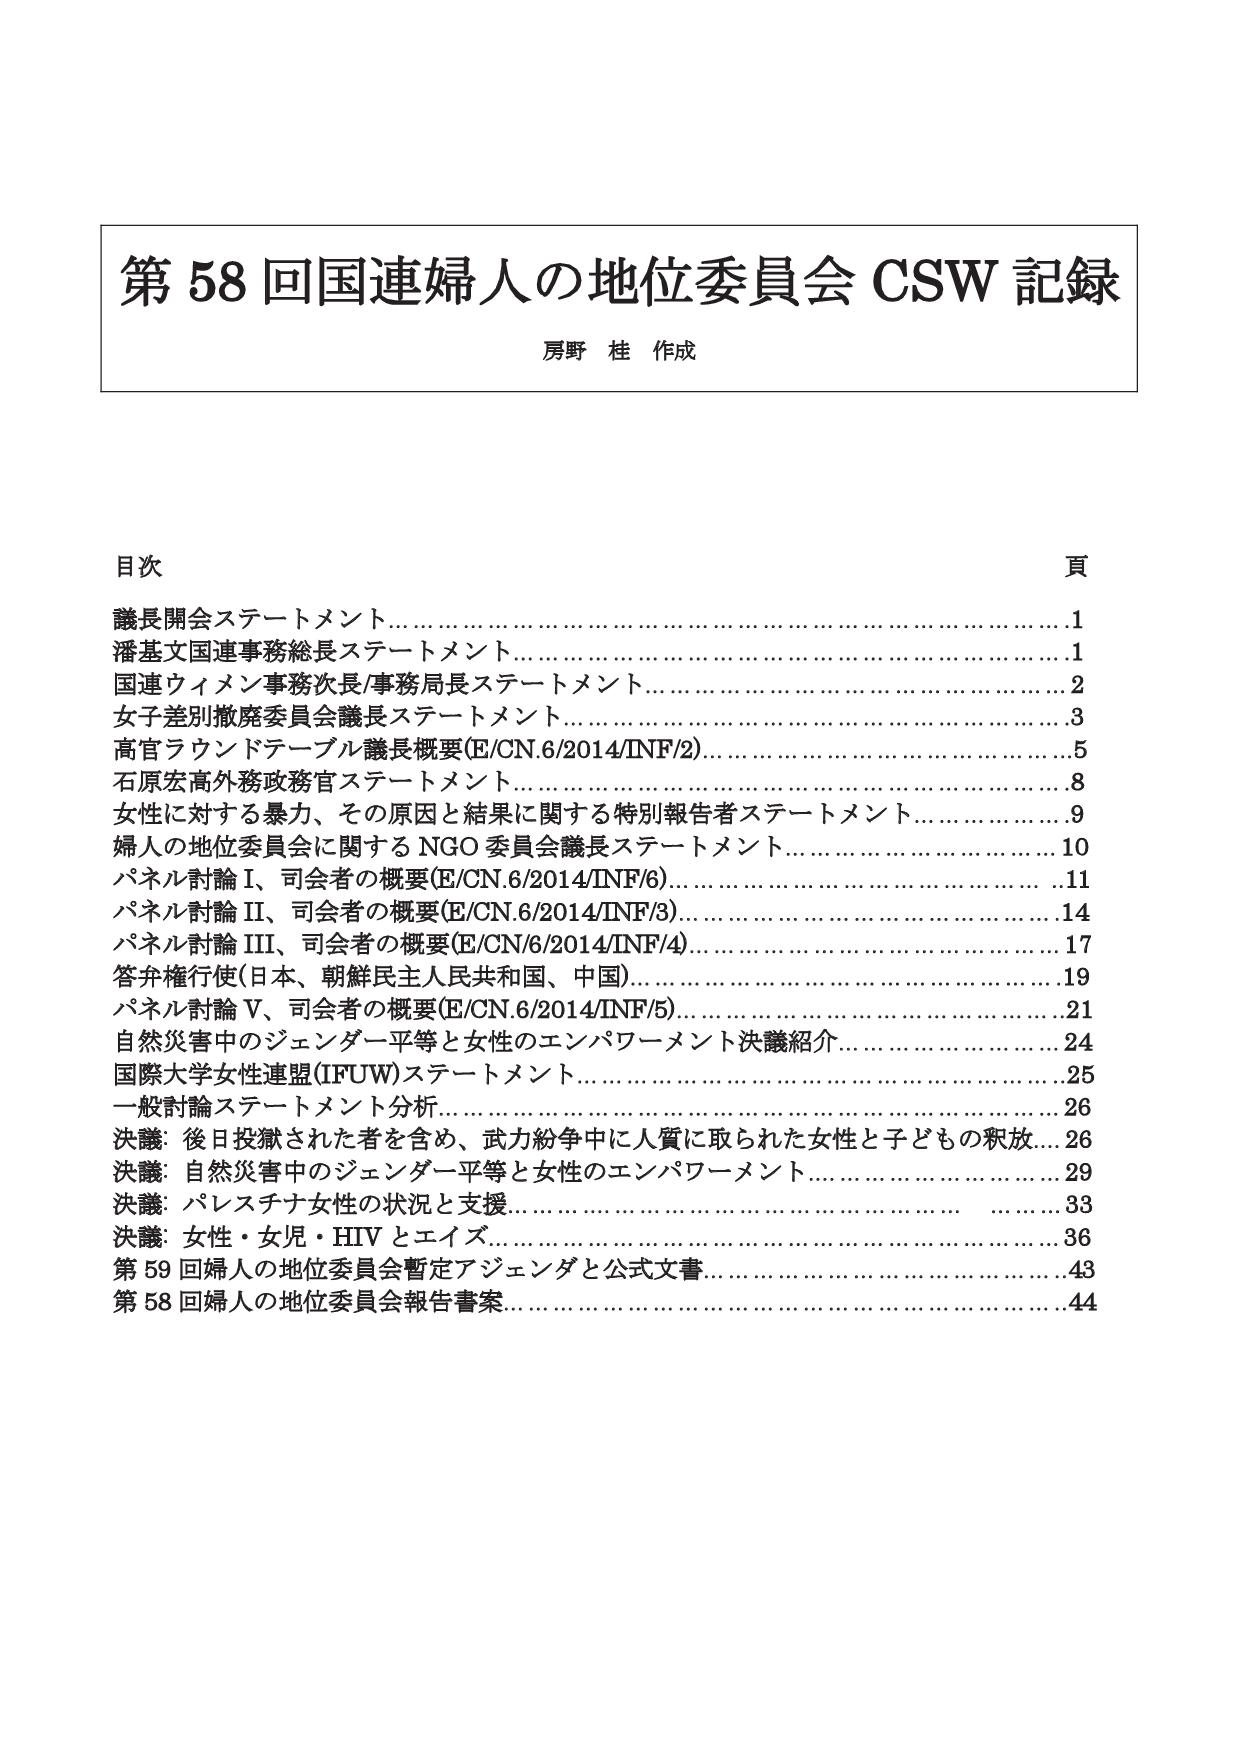 2014 CSW58記録表紙